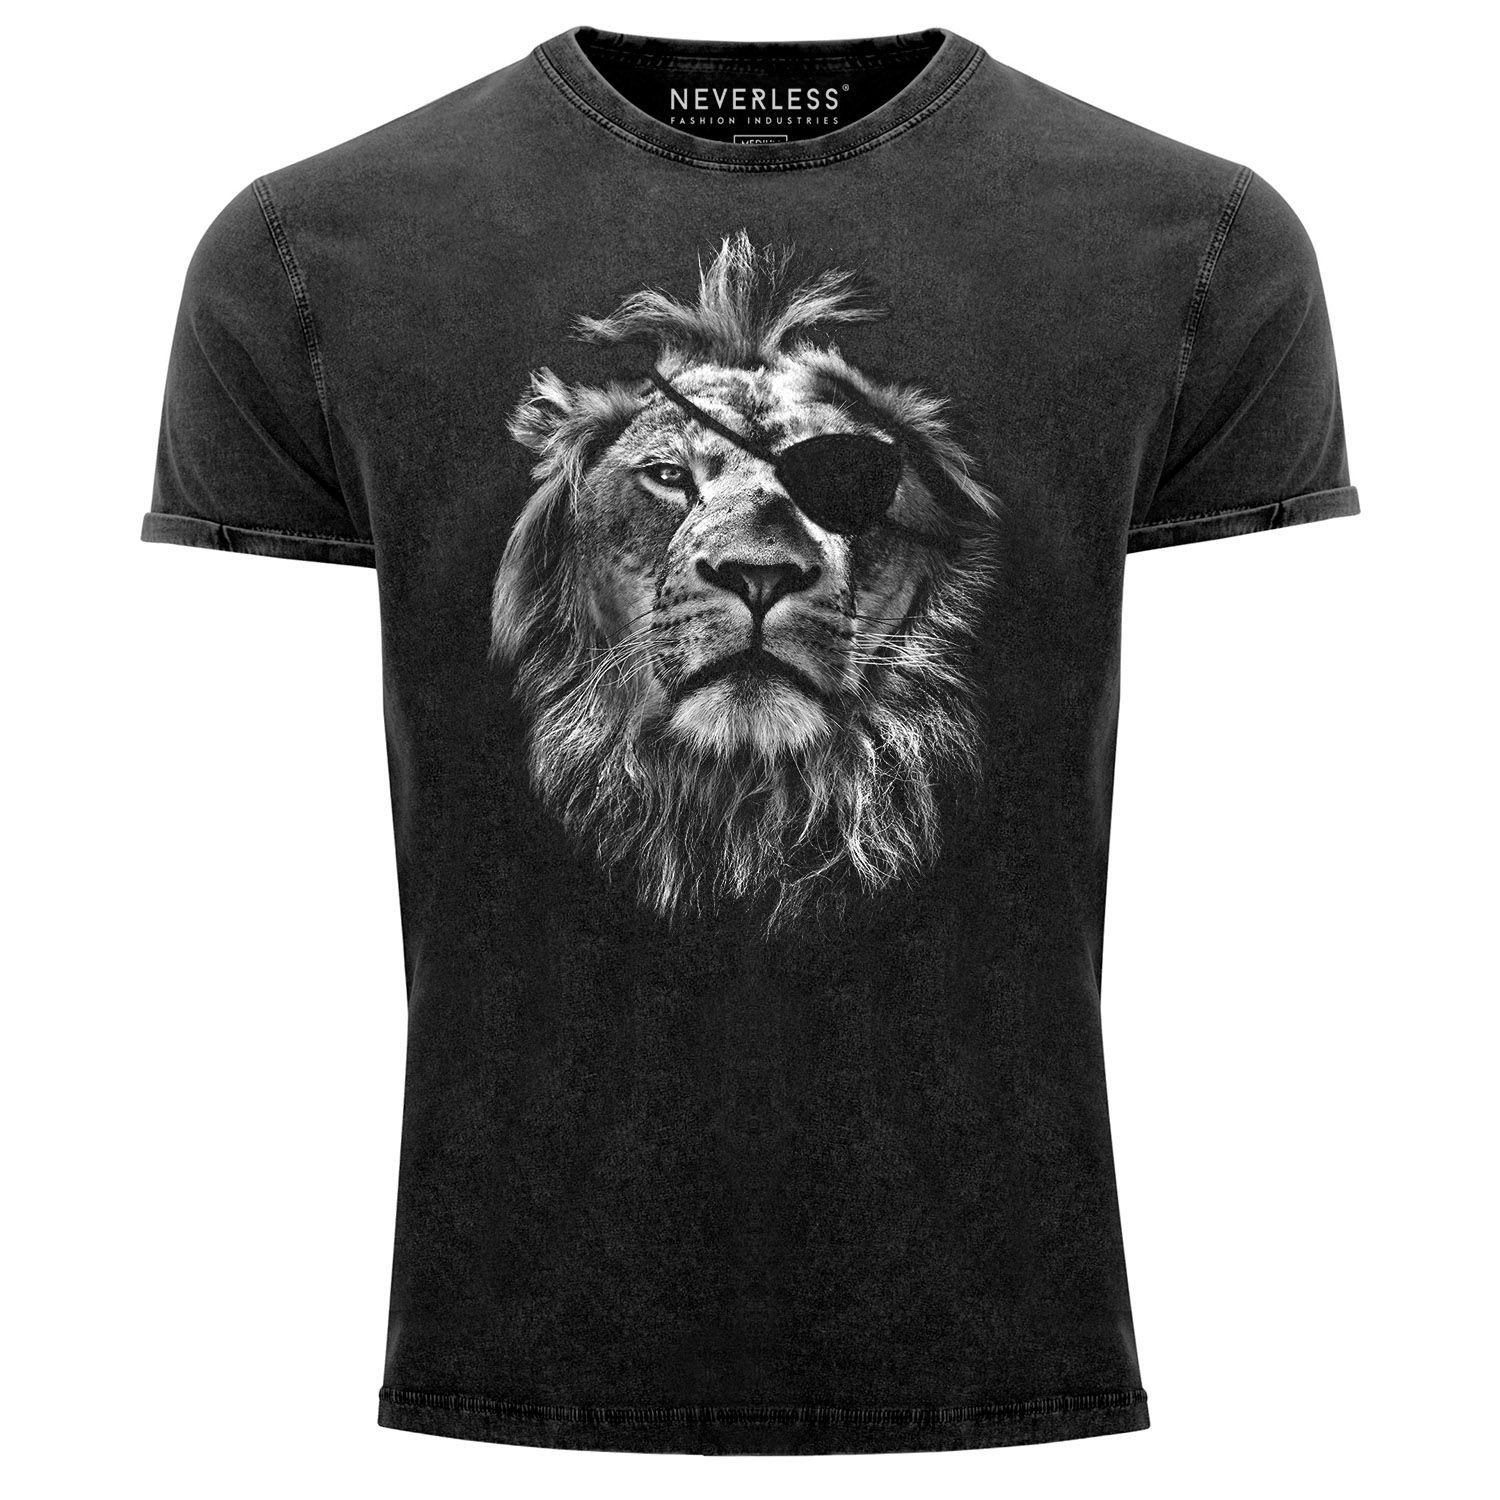 Neverless Print-Shirt Cooles Angesagtes Herren T-Shirt Vintage Shirt Löwe Lion Aufdruck Used Look Slim Fit Neverless® mit Print